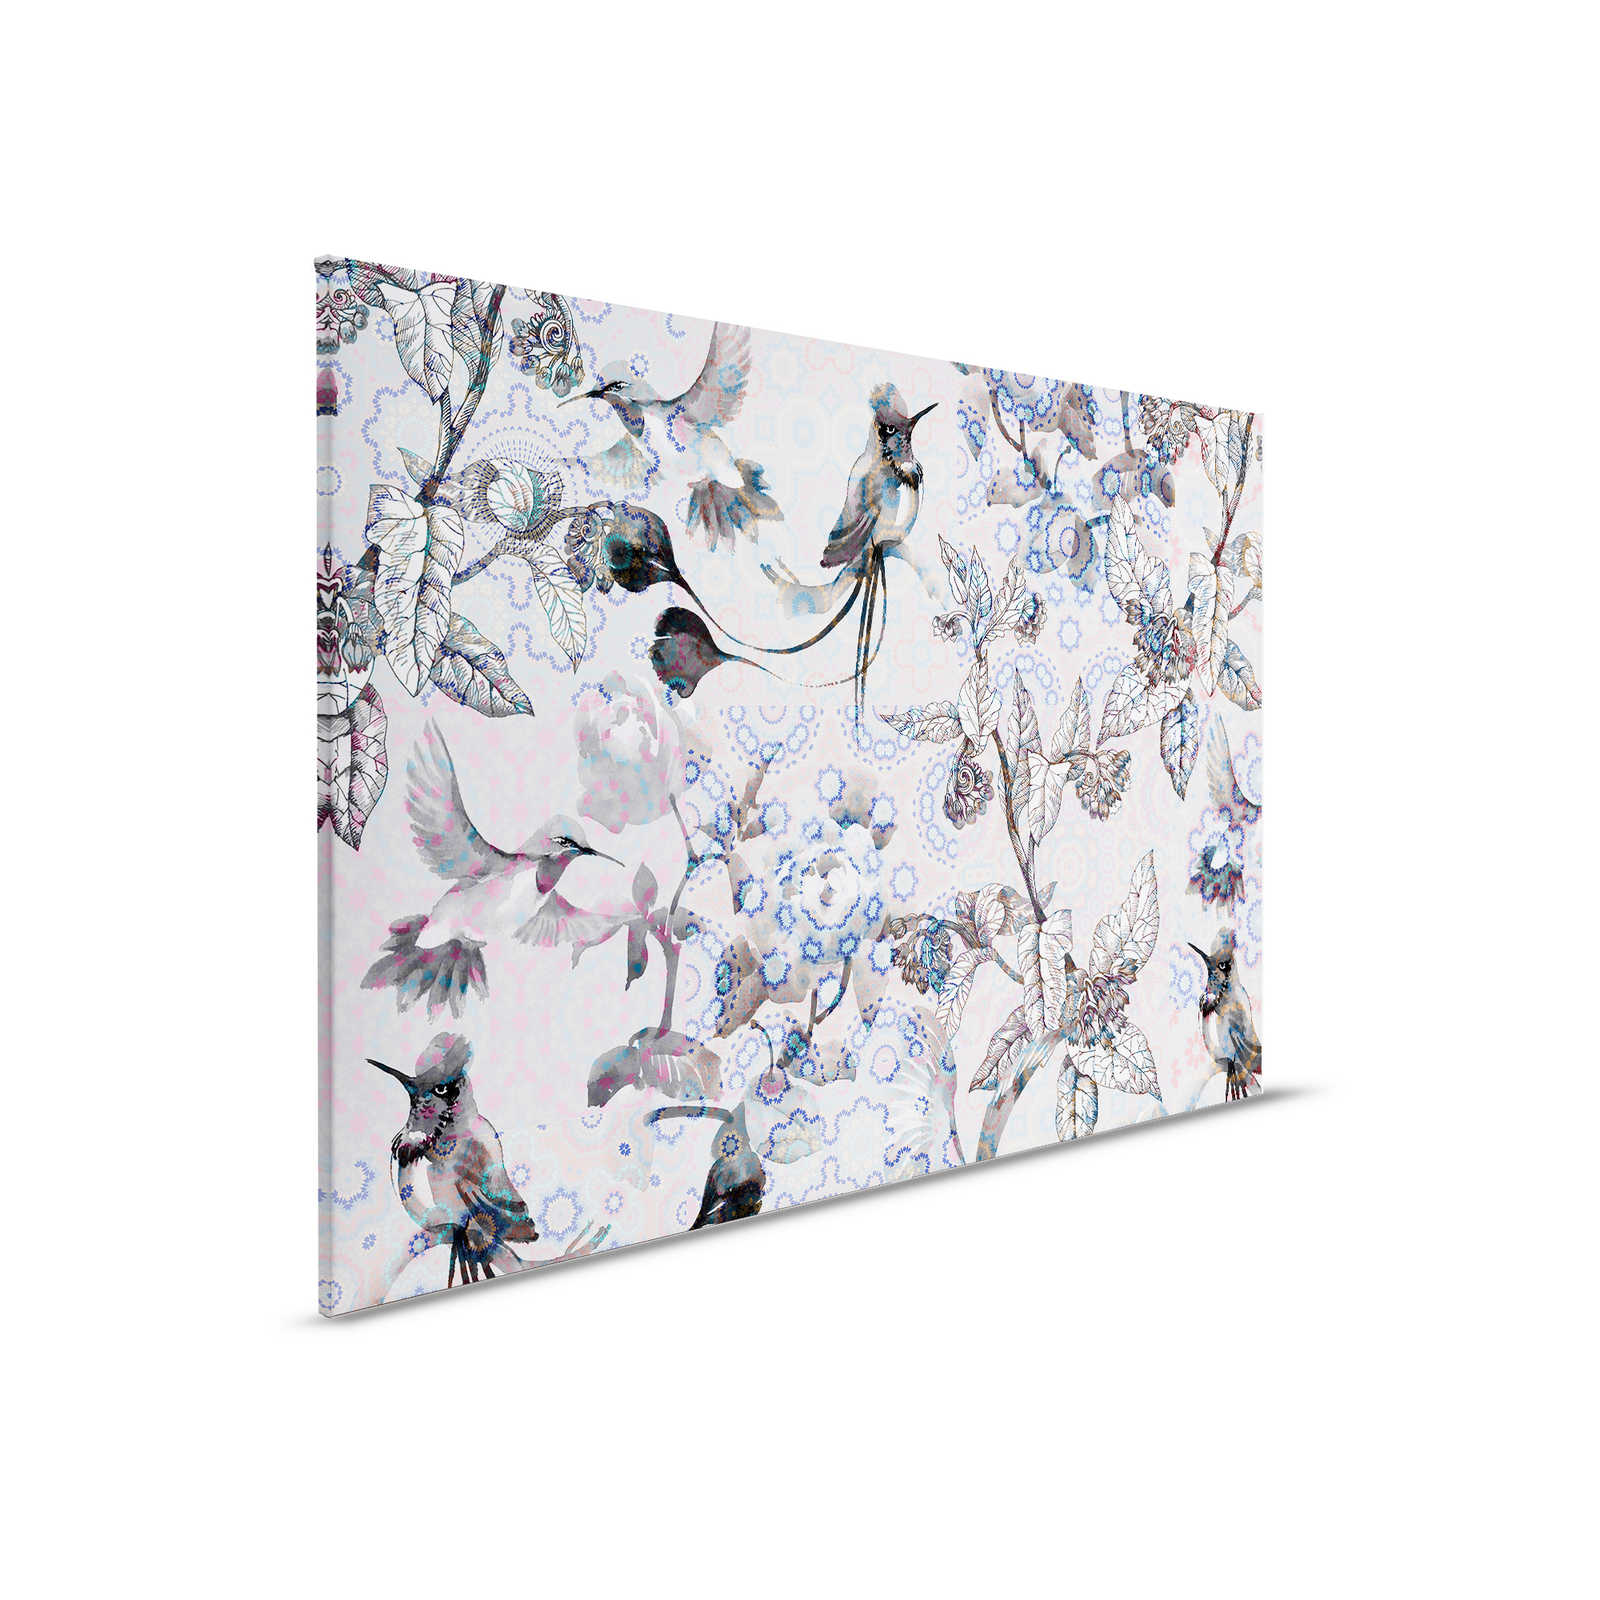 Leinwandbild Natur Design im Collage Stil | exotic mosaic 3 – 0,90 m x 0,60 m
